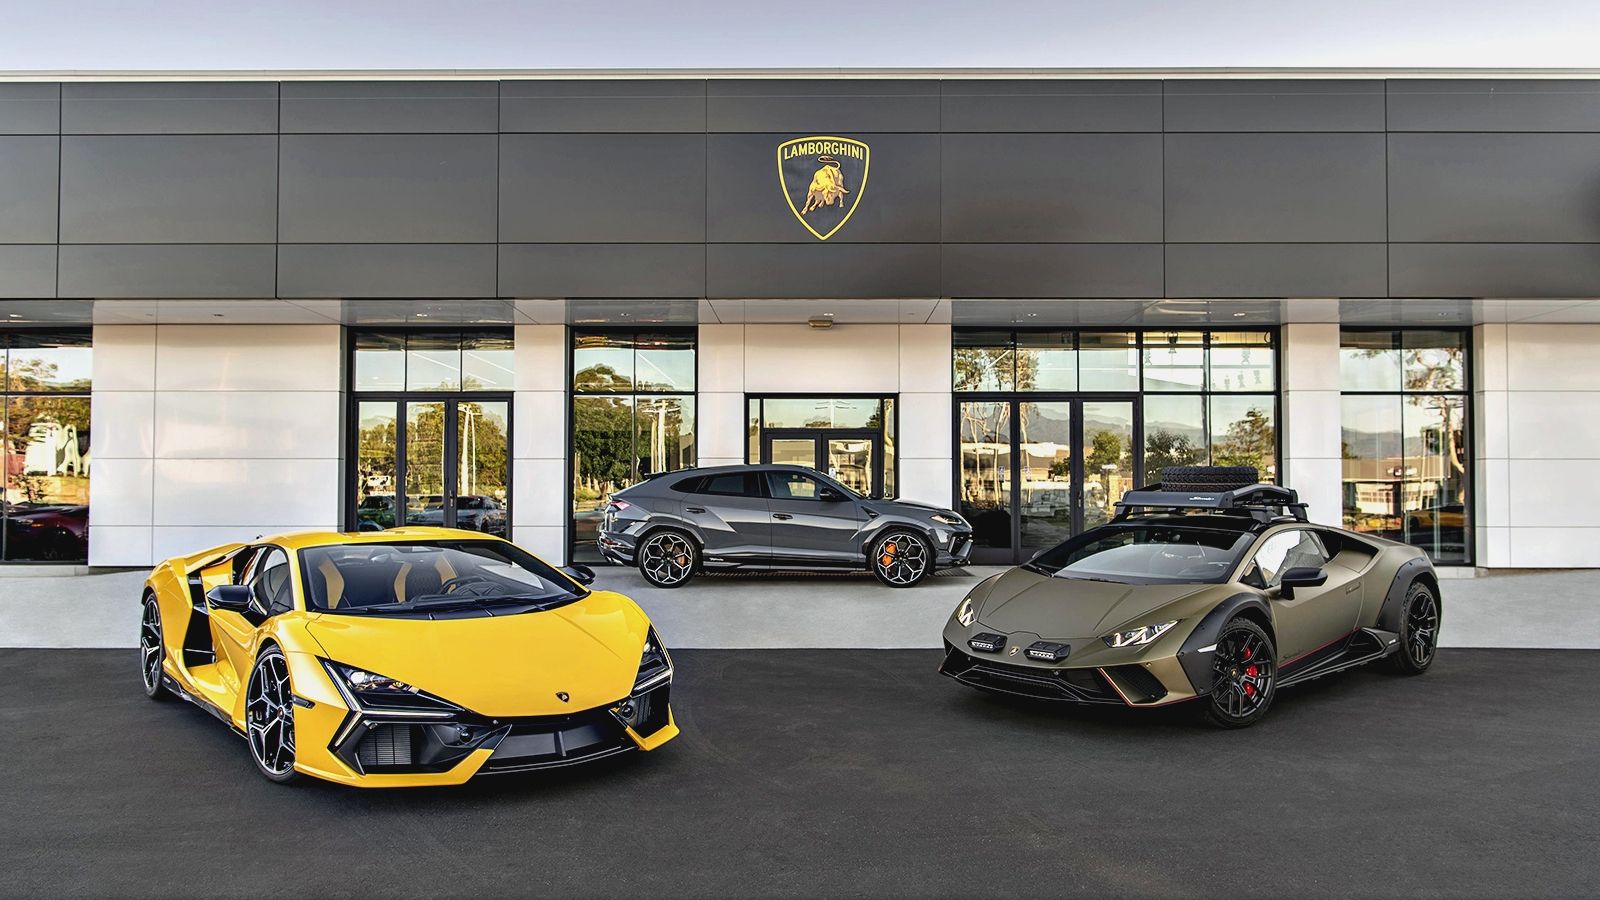 Lamborghini Dealership U.S.A.